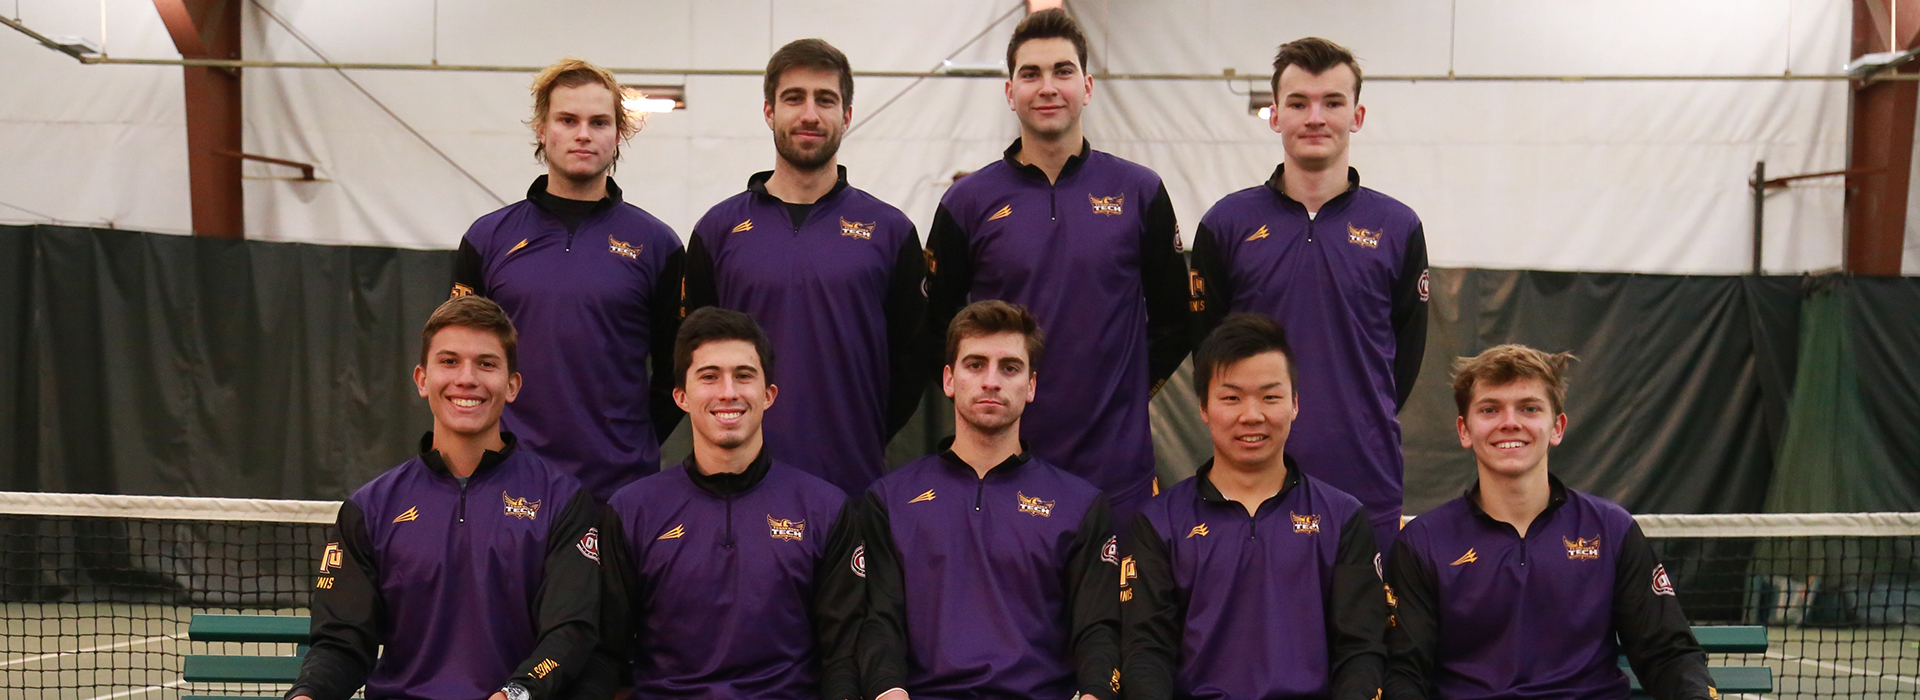 ITA recognizes Tech tennis team, five Golden Eagle student-athletes for academic achievement